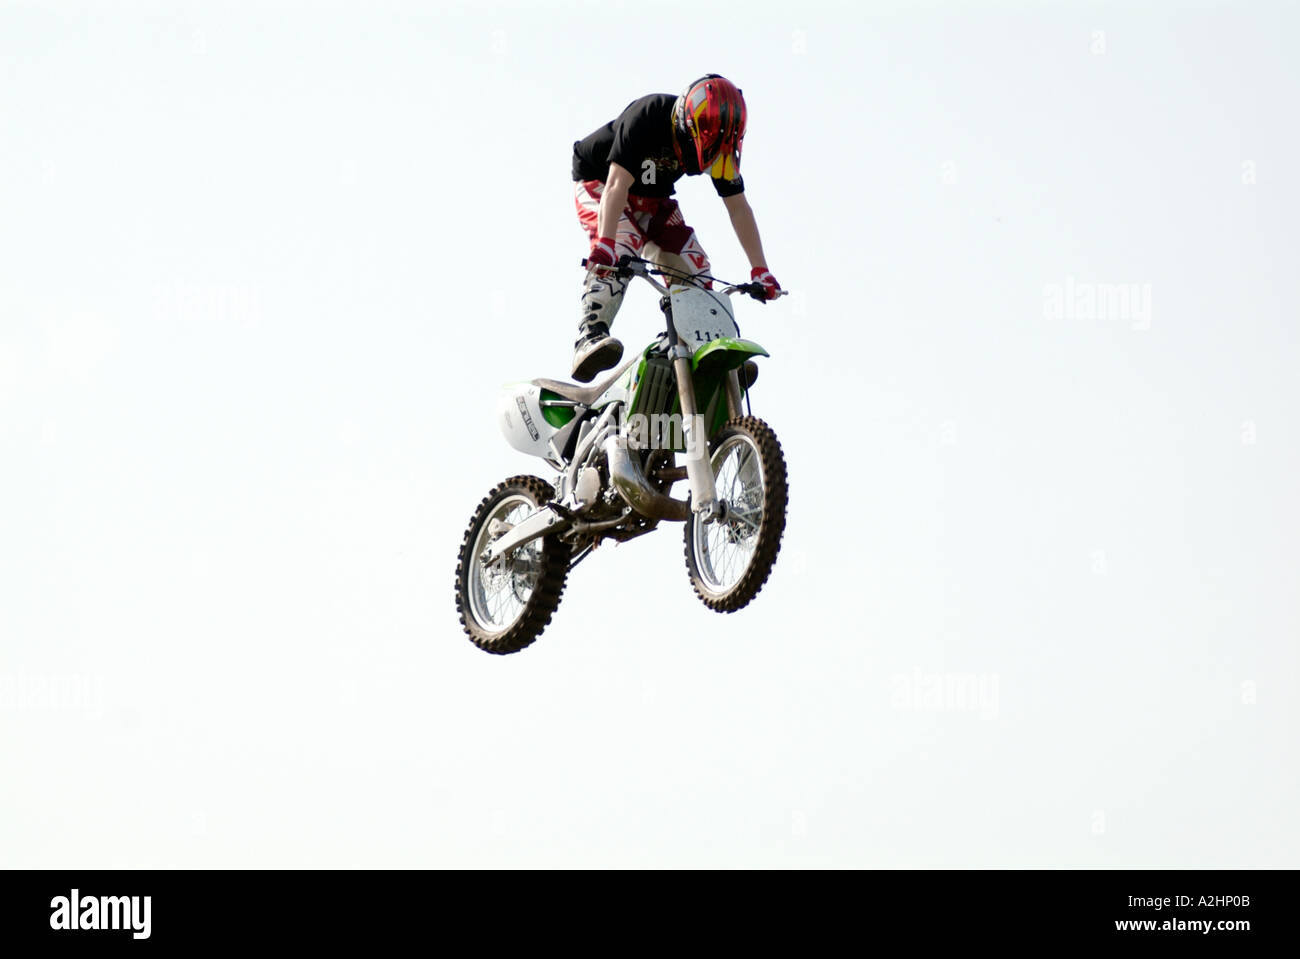 Free style moto cross moteur motorcross motoX X sport extrême danger jump  wheelie wild moto Moto moto cycle fly Photo Stock - Alamy